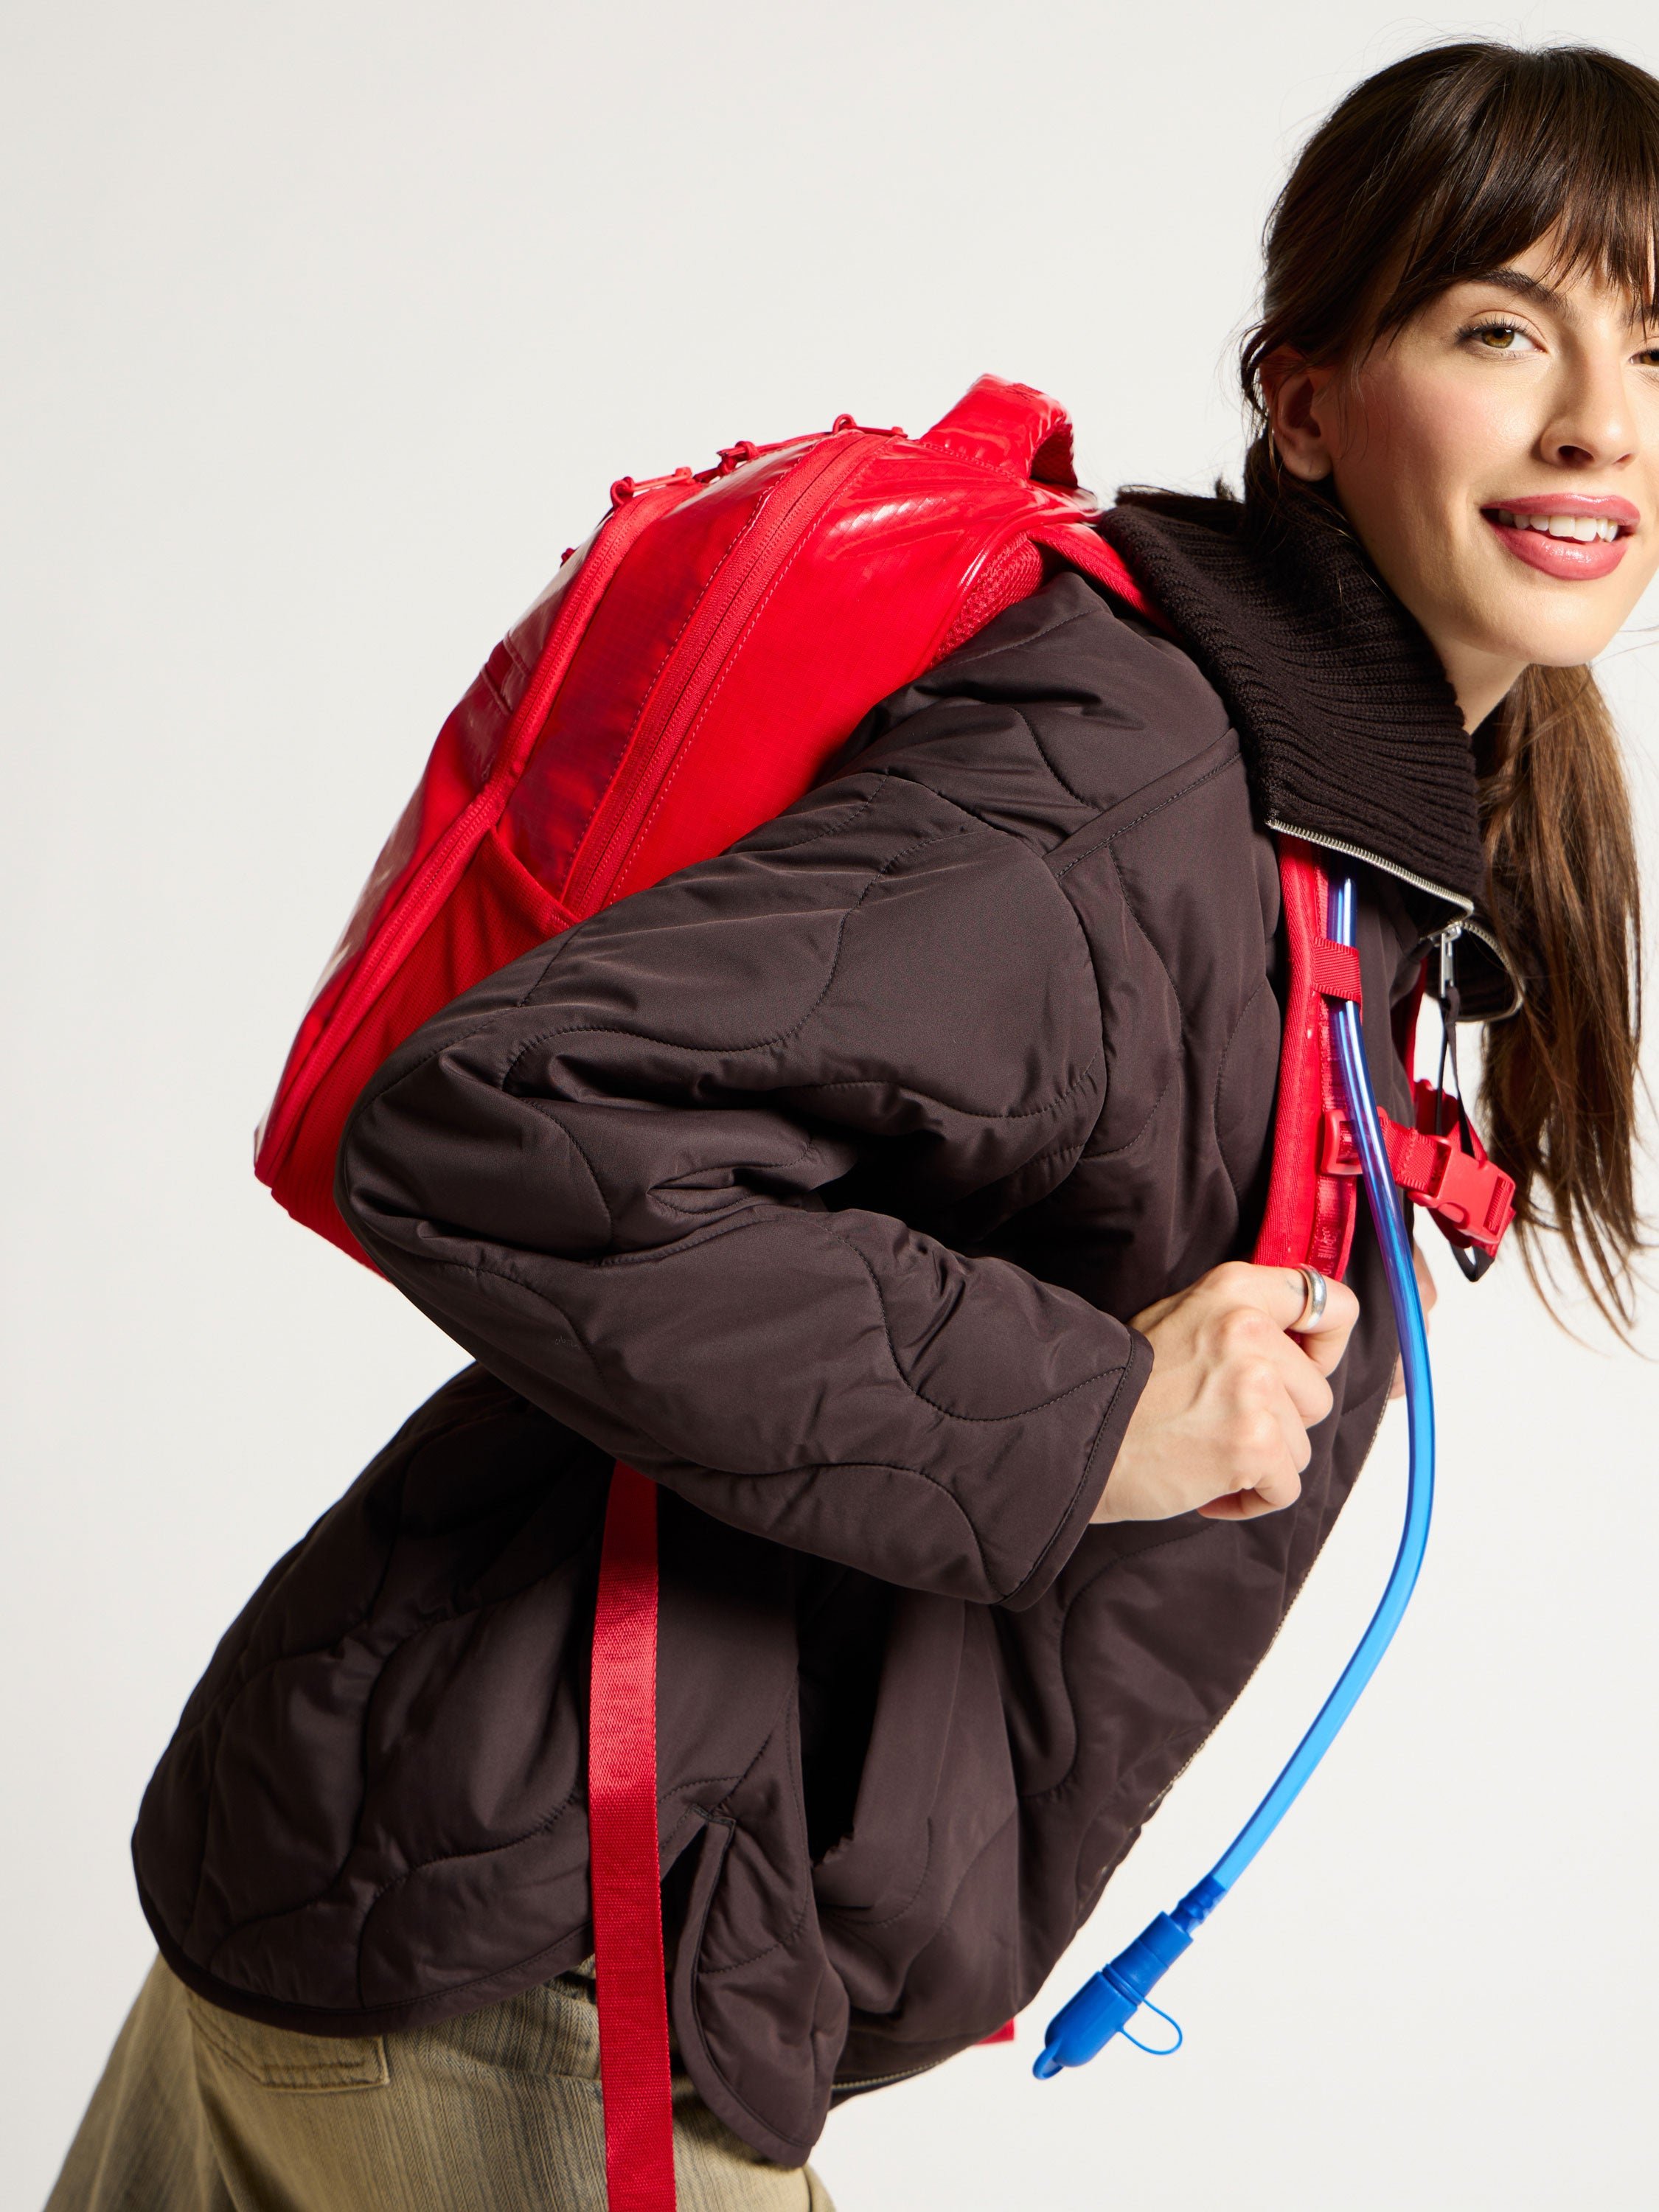 Model wearing red CALPAK Hydration Backpack on back